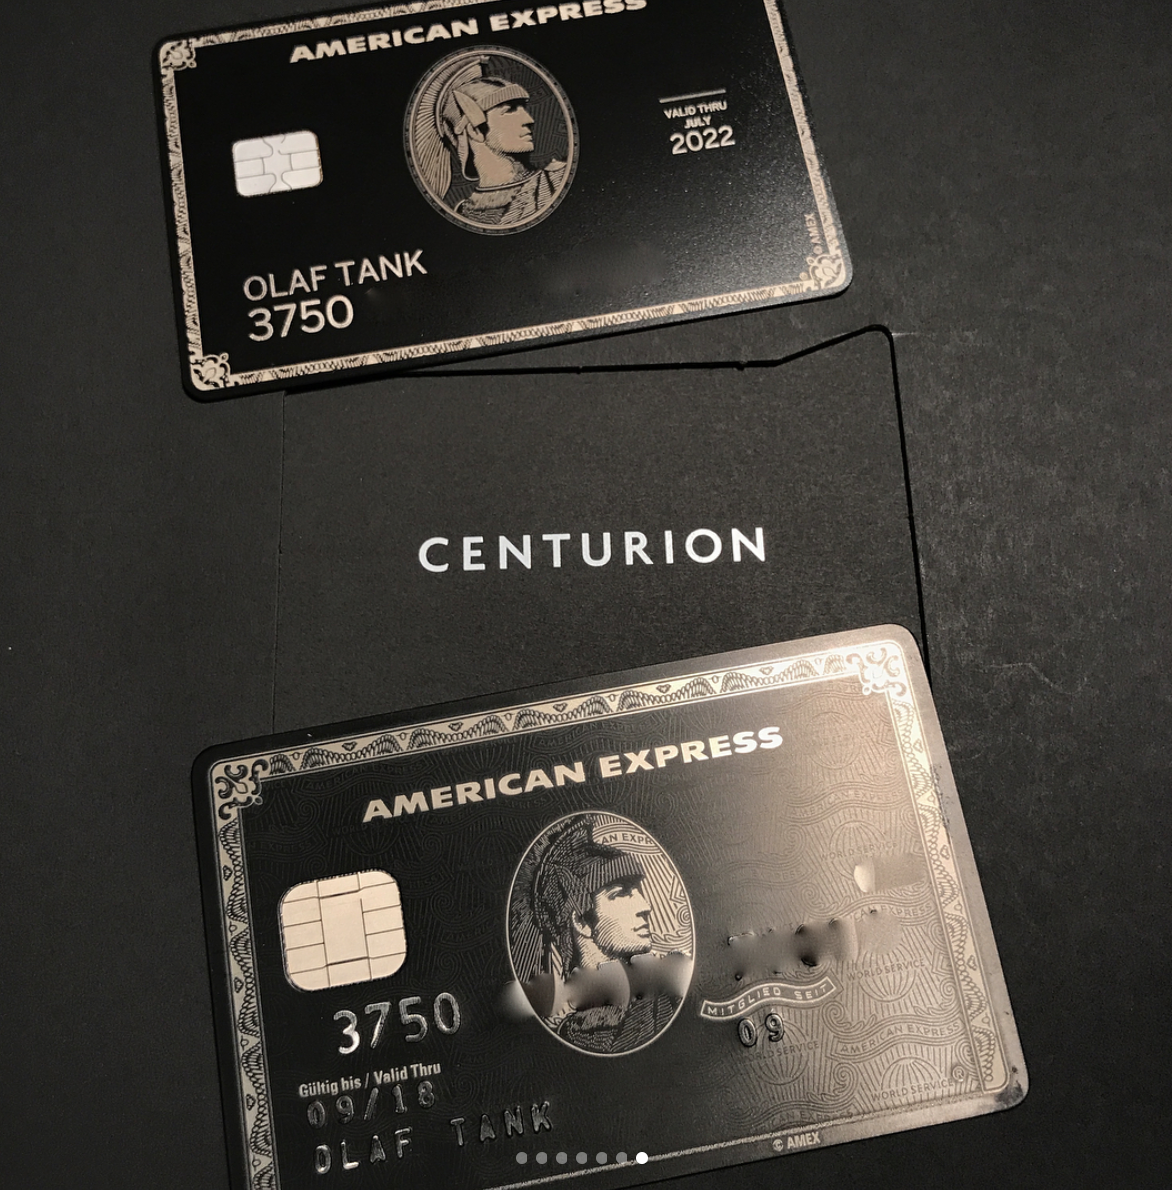 centurion card benefits